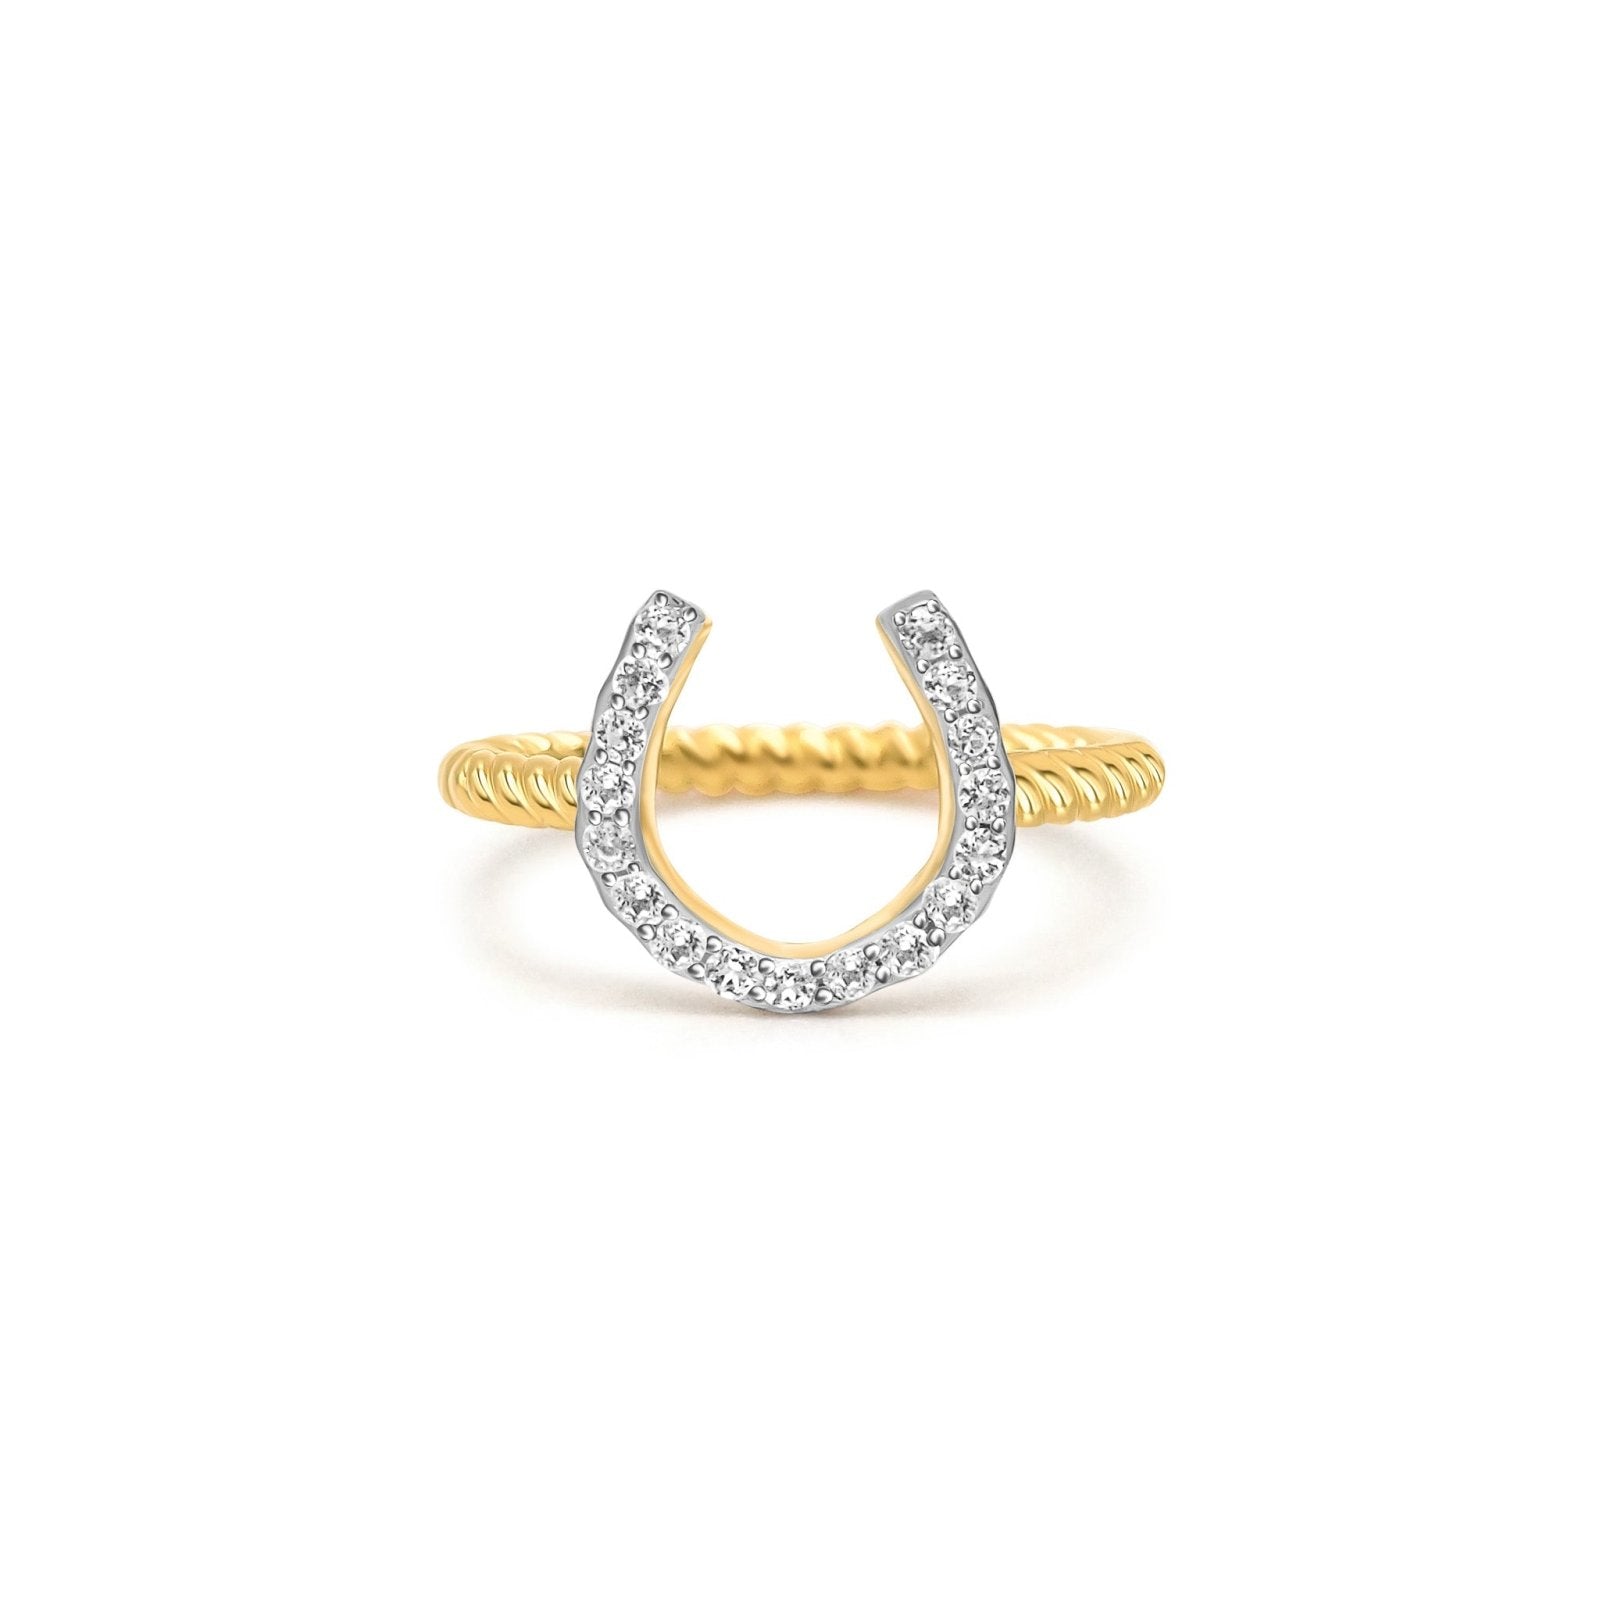 The Horseshoe Gold Vermeil Ring - Honoura